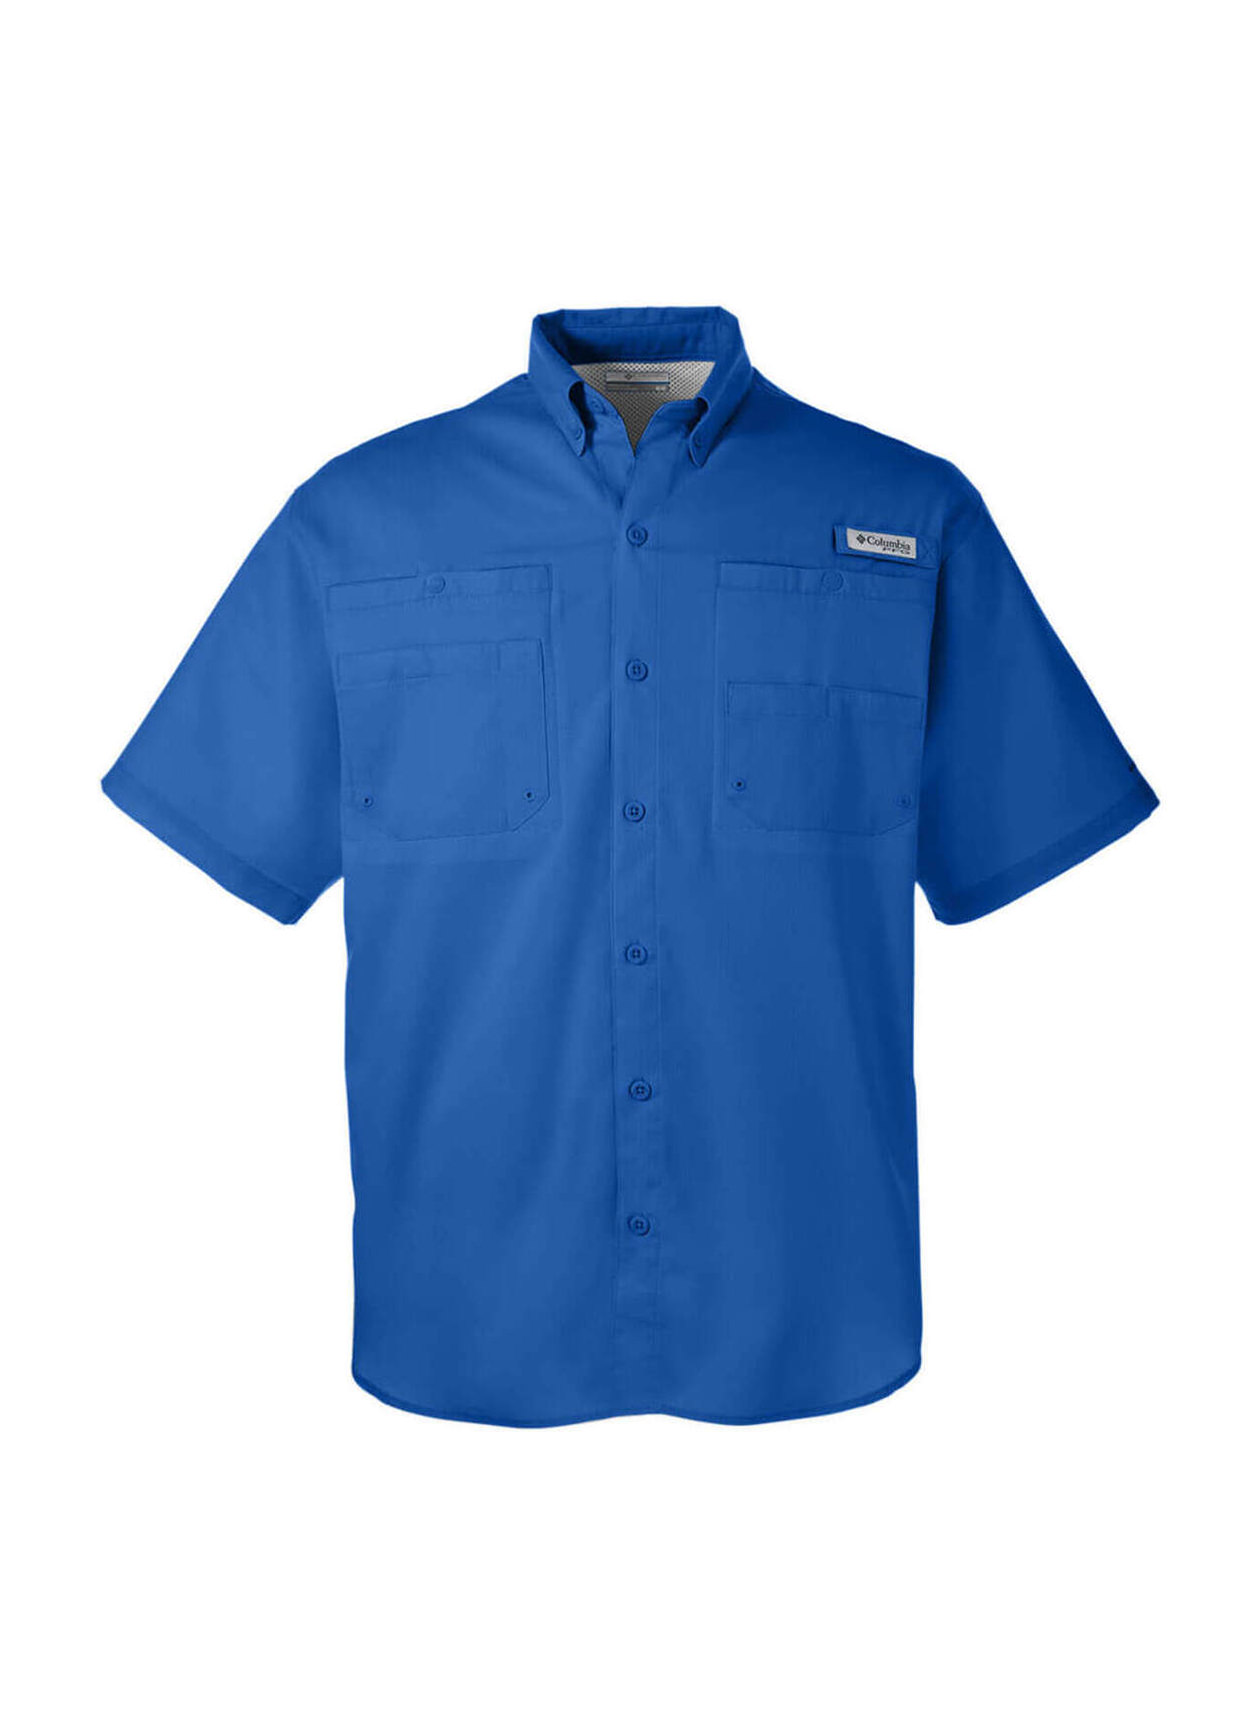 Columbia Men's Vivid Blue Short-Sleeve Shirt